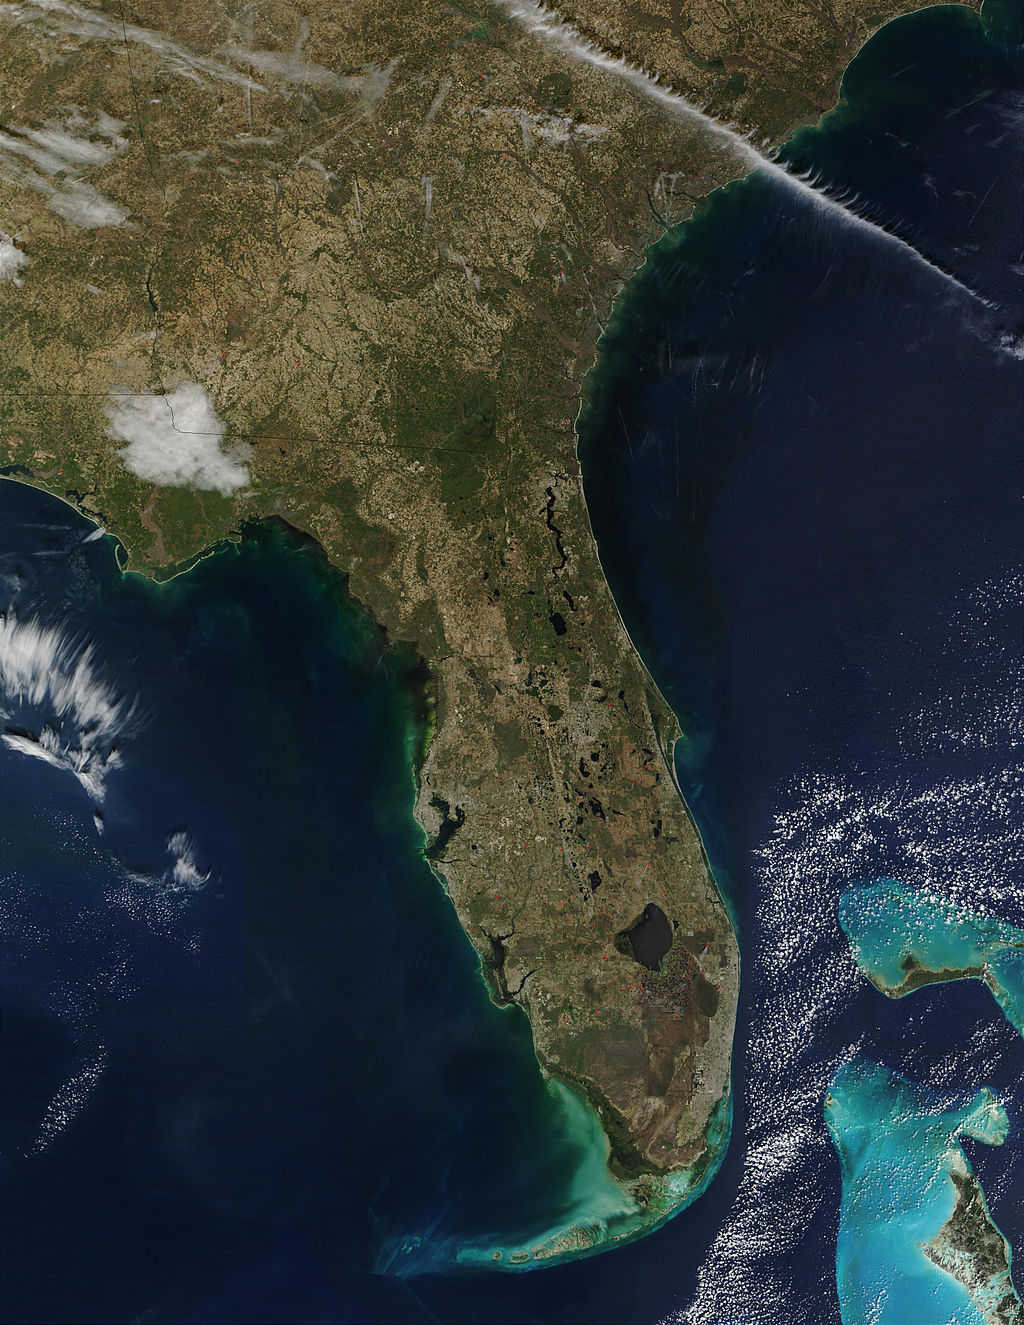 Florida legislature fails on water quality